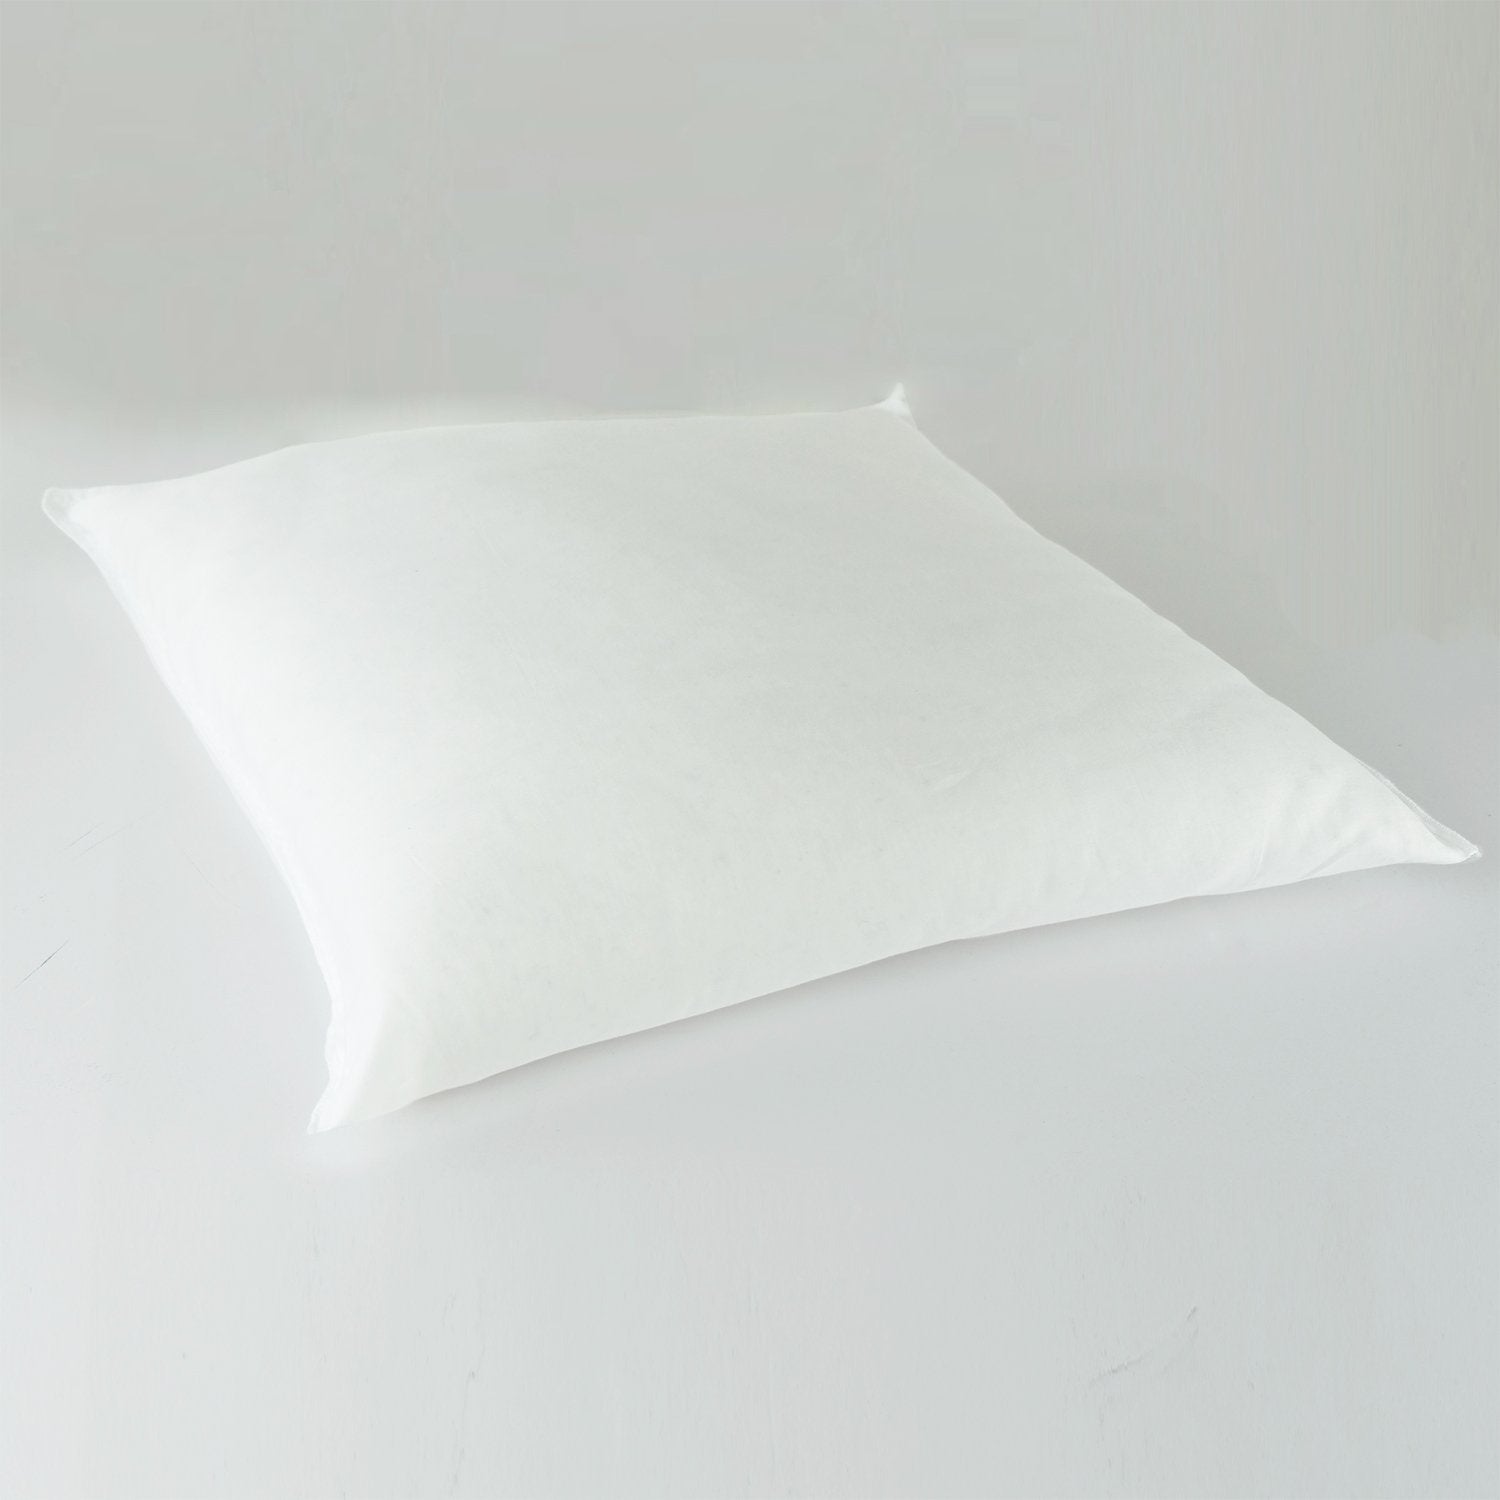 J-Life Nami Blue Zabuton Floor Pillow_Pillows & Shams_Zabuton Floor Pillows_100% Cotton_Reversible